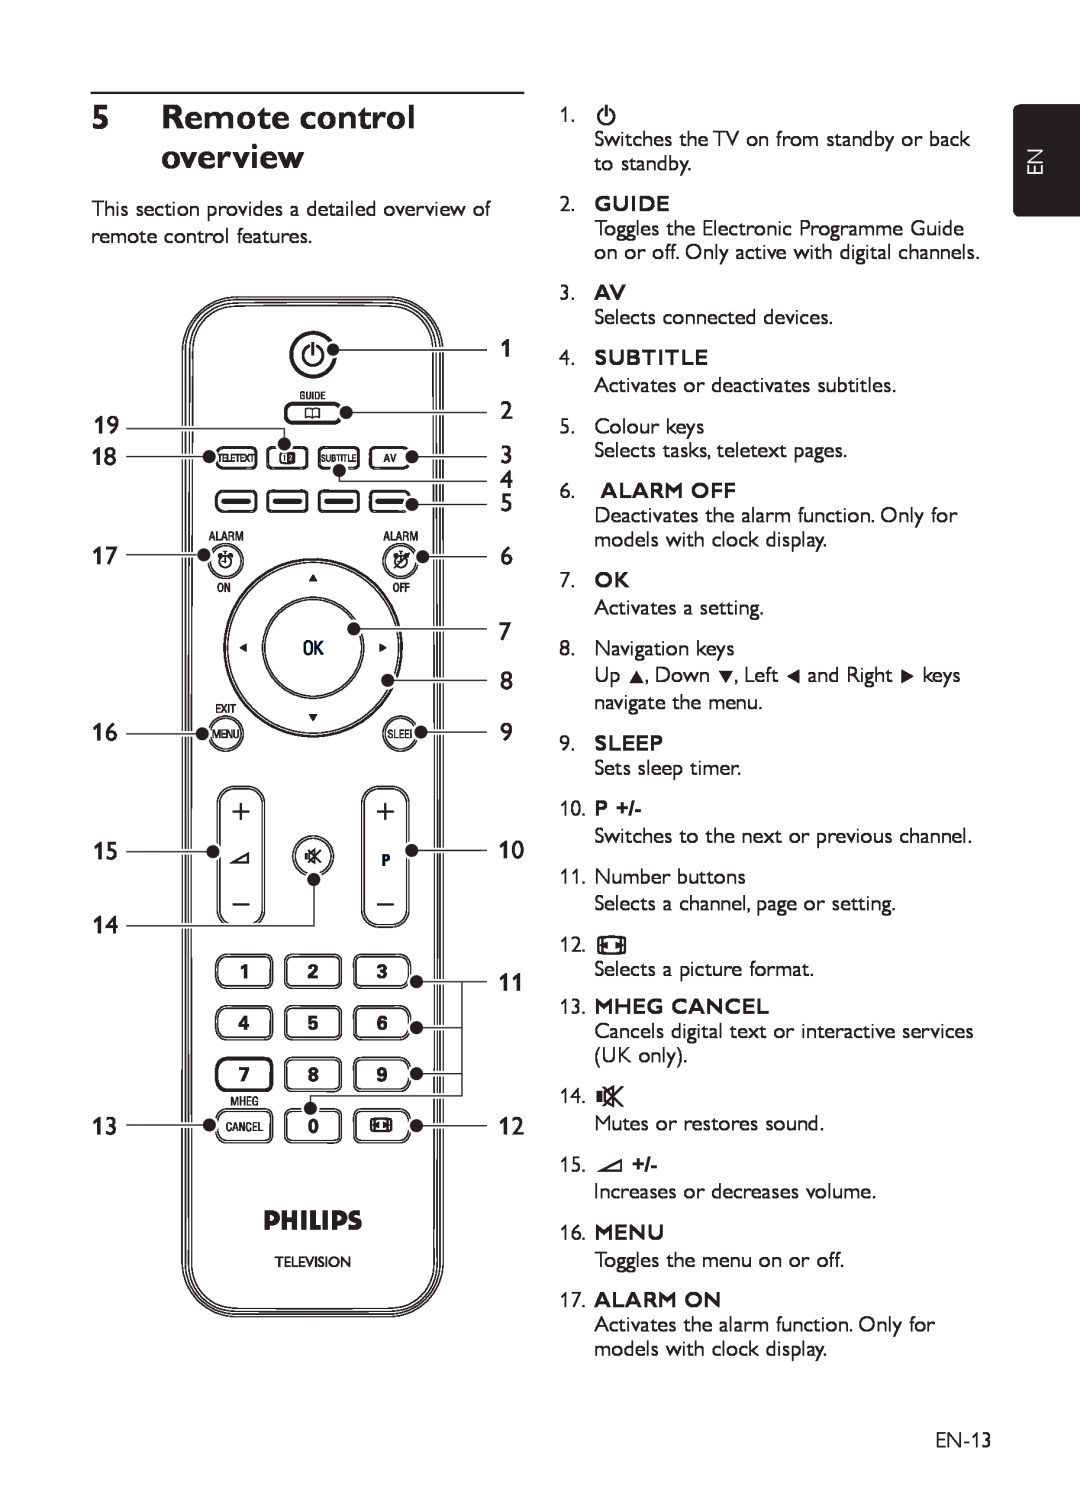 Philips 32HFL3350D Remote control overview, Guide, 3. AV, Subtitle, Alarm Off, 7. OK, Sleep, 10. P +, Mheg Cancel, 15. ” + 